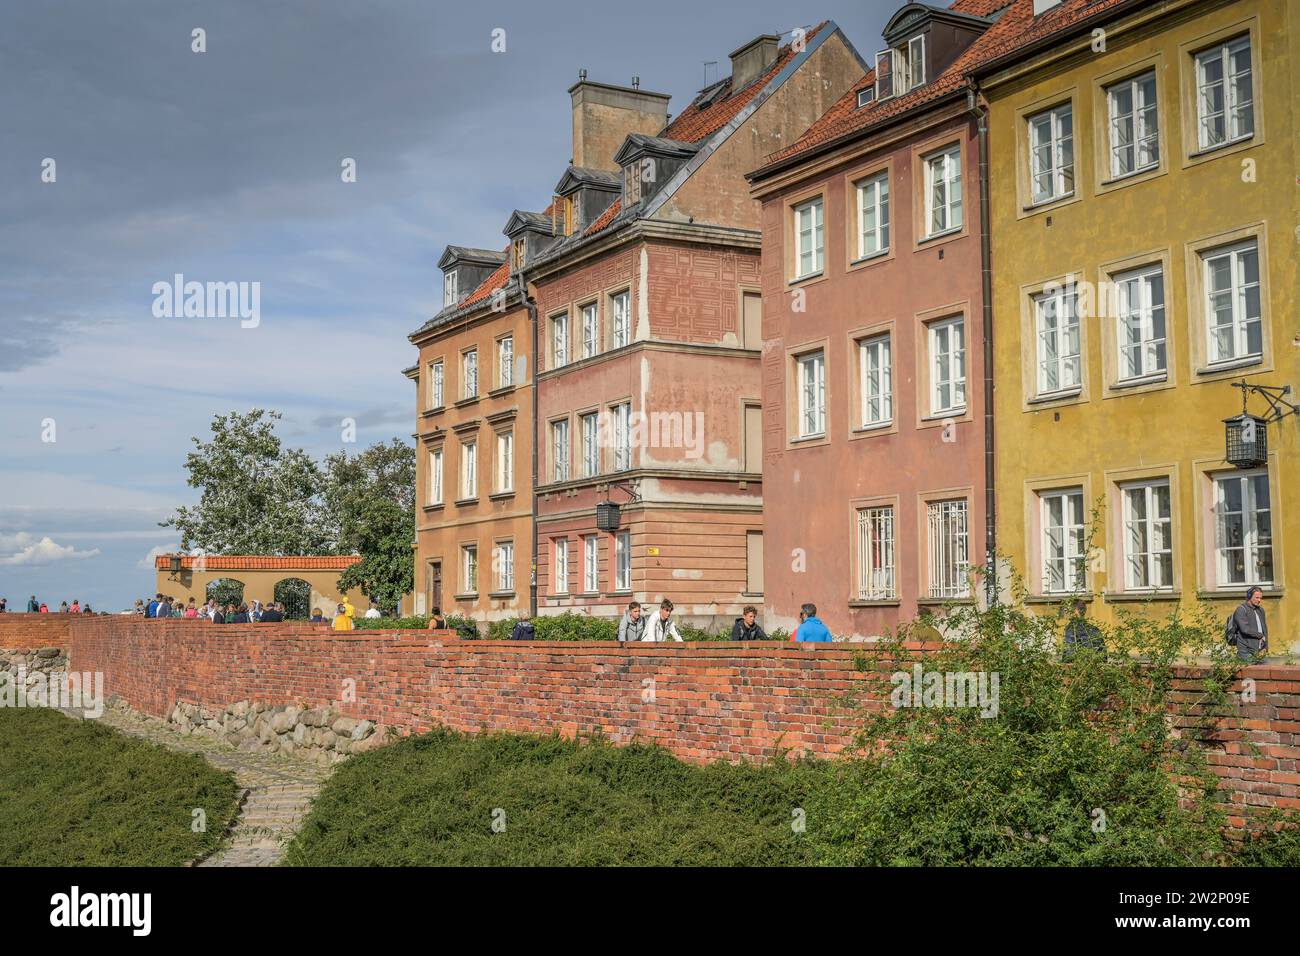 Altbauten, Häuser an der Stadtmauer, Miedzymurze Jana Zachwatowicz, Altstadt Stare Miasto, Warschau, Woiwodschaft Masowien, Polen Stockfoto